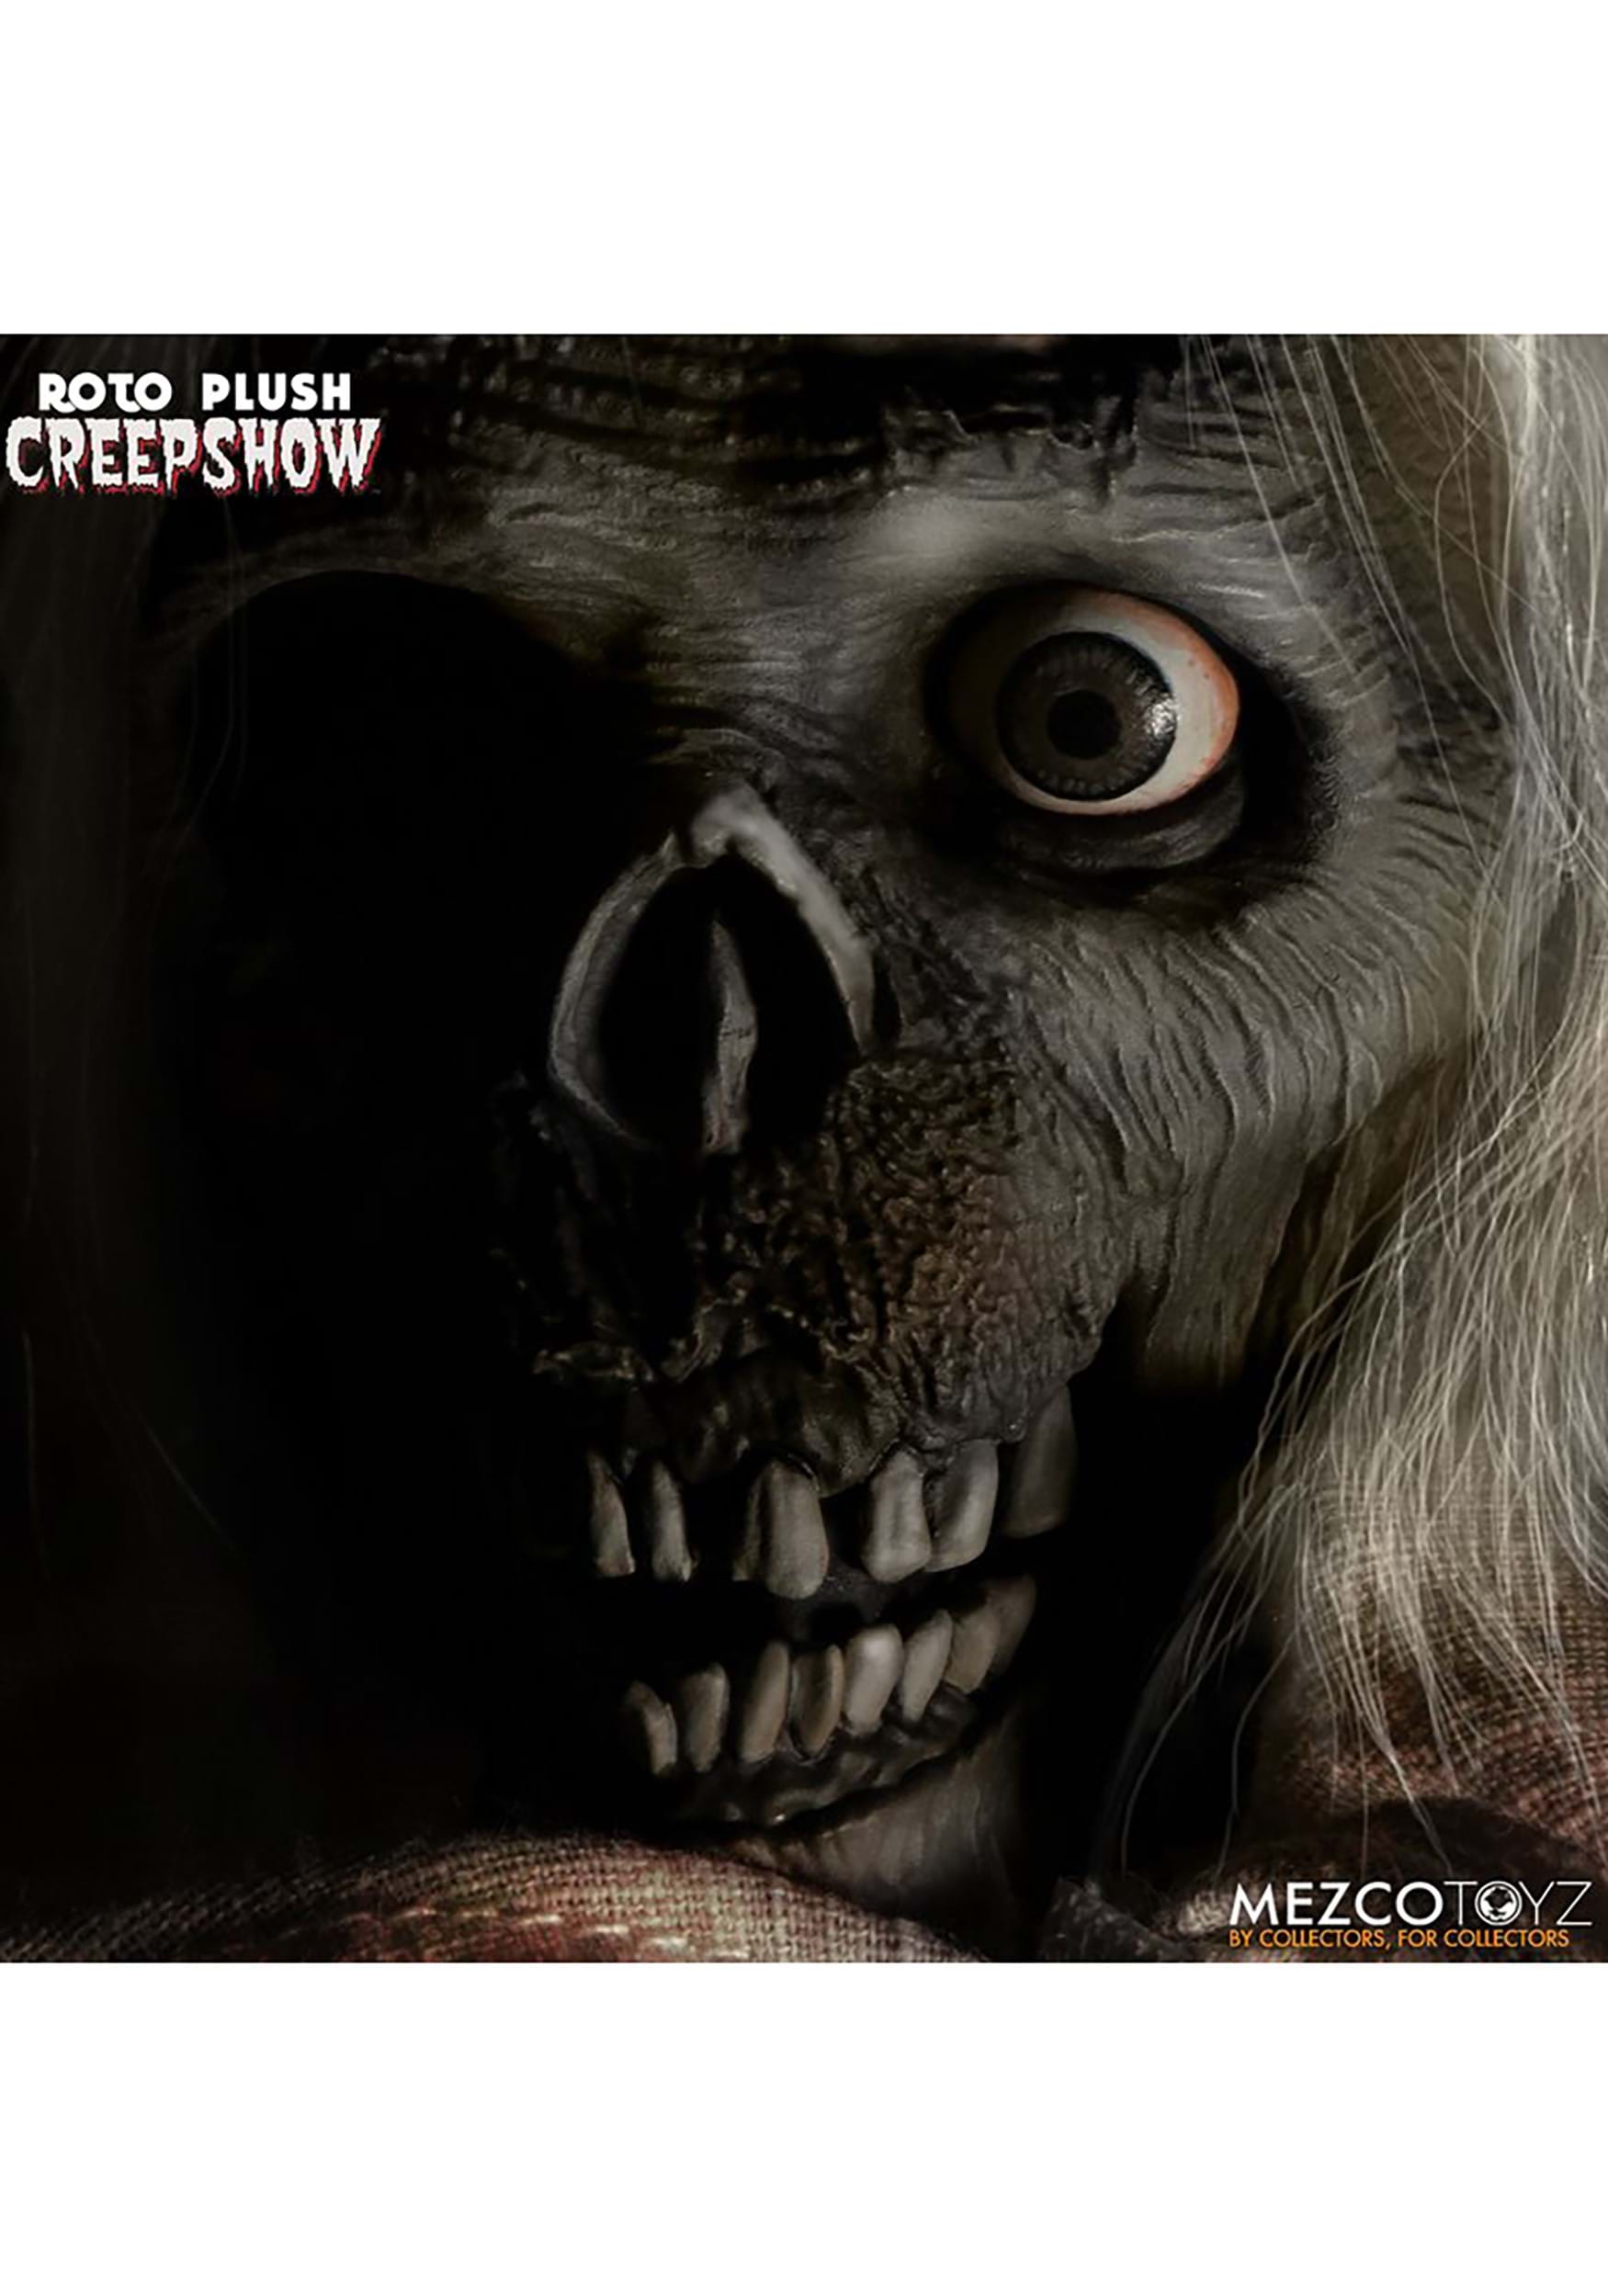 Creepshow: The Creep MDS Roto Plush Doll